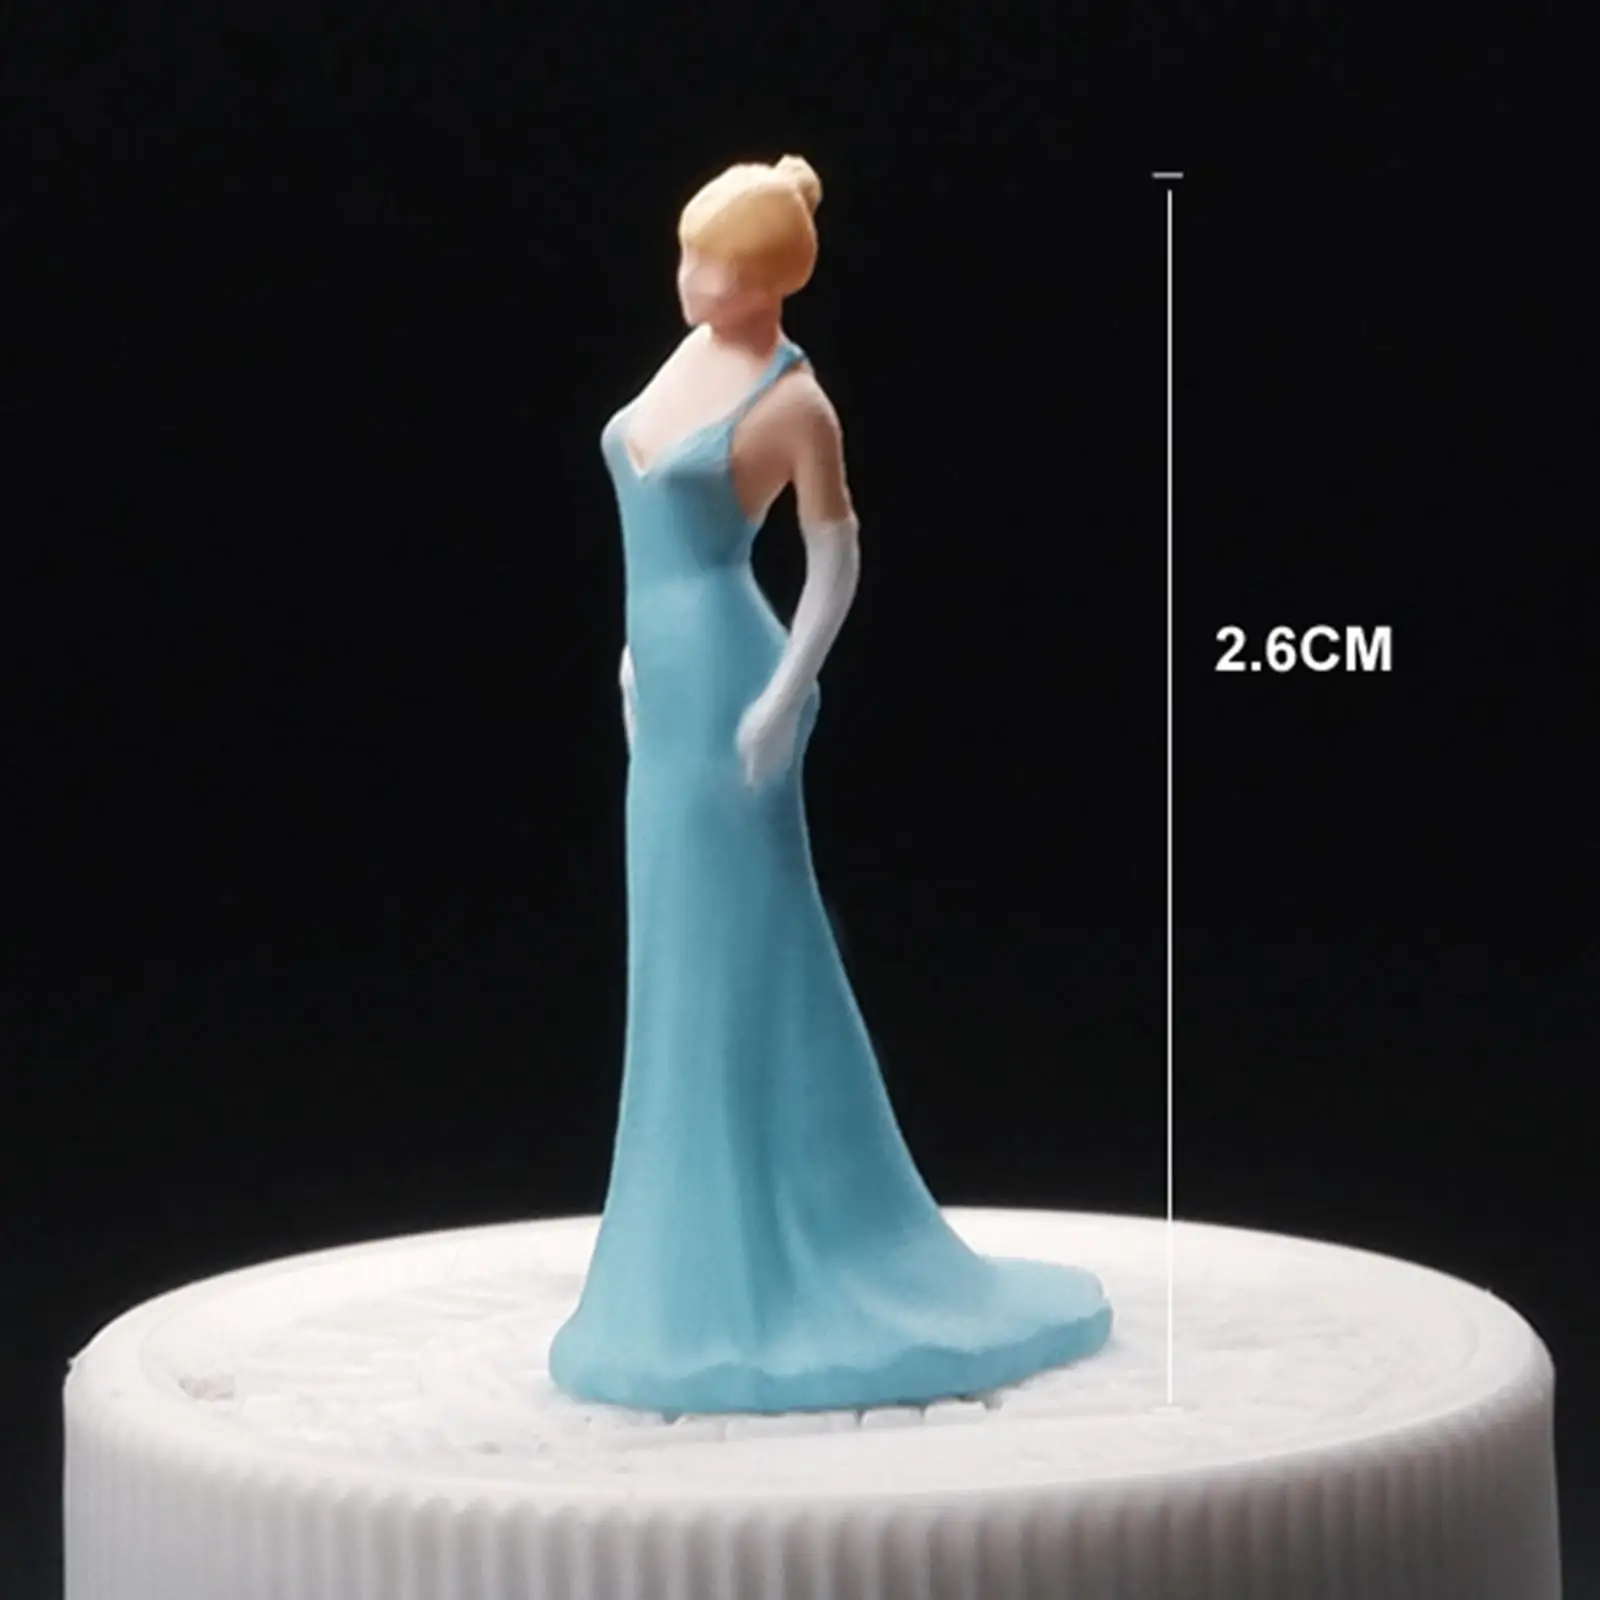 1/64 Scale Evening Dress Girl Model Resin Architectural Miniature Girl Model for Desktop Decoration Micro Landscape Train Layout